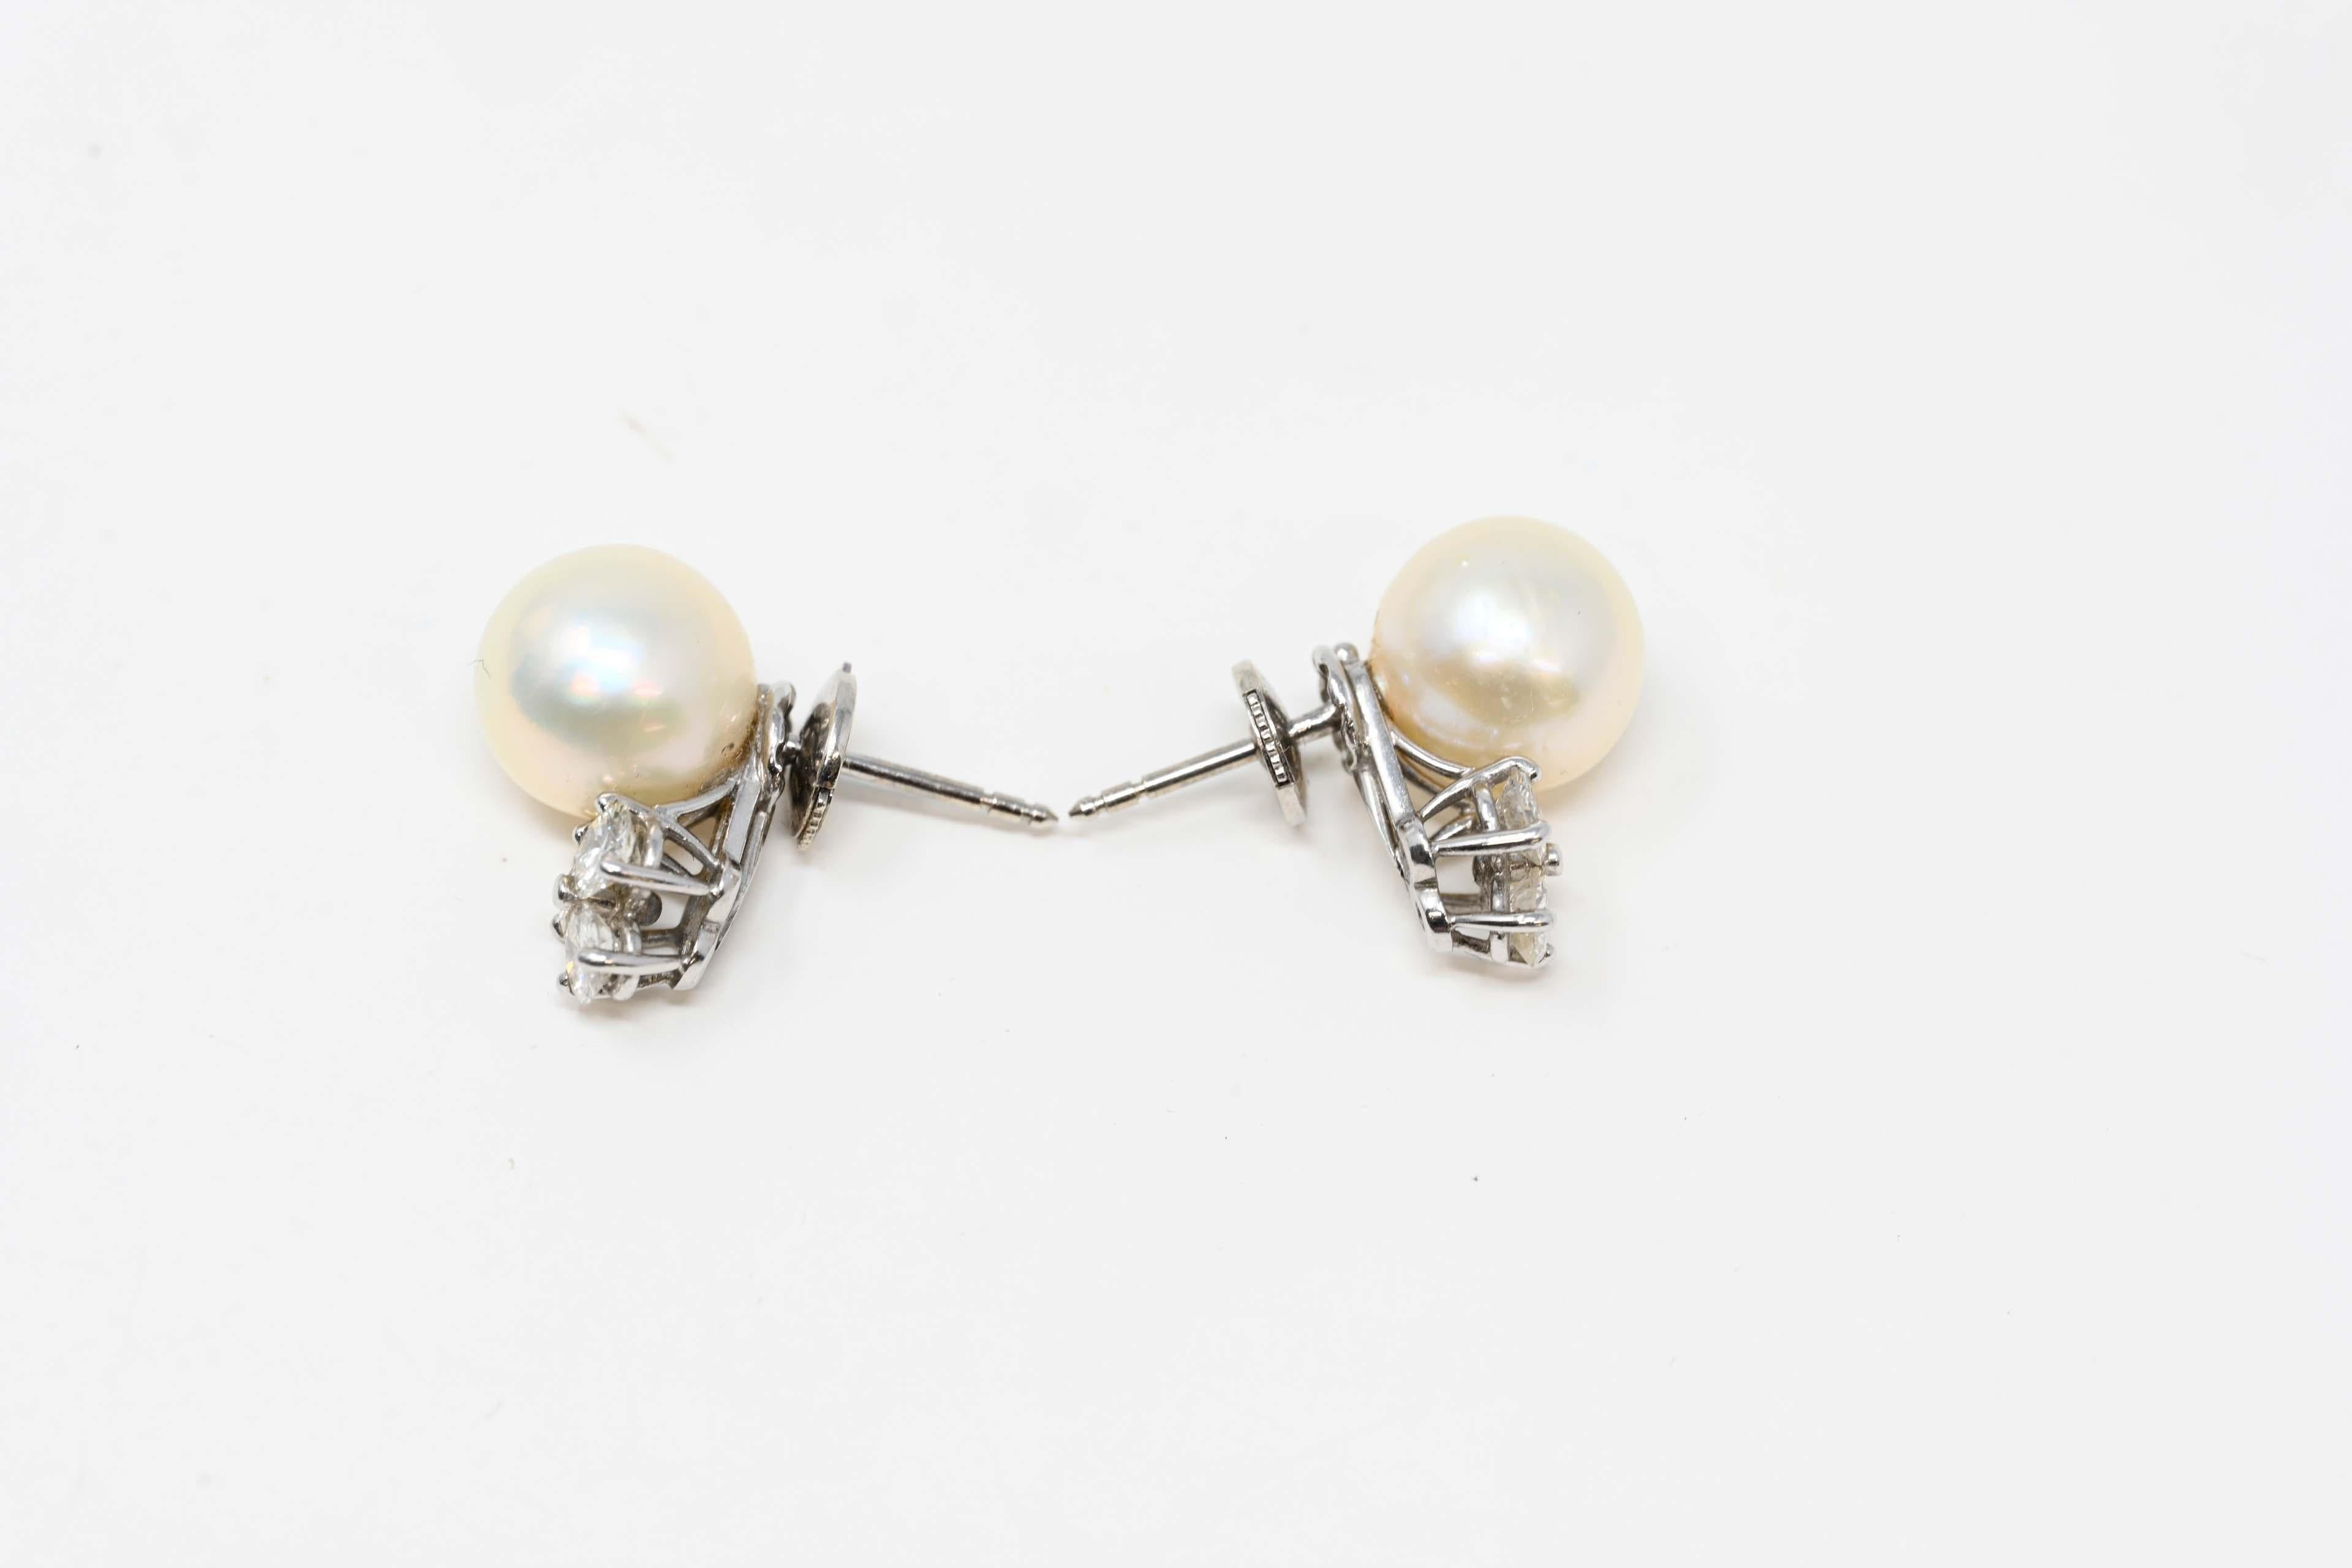 Brilliant Cut Vintage 14k White Gold Earrings Diamond & 10mm Pearl For Sale